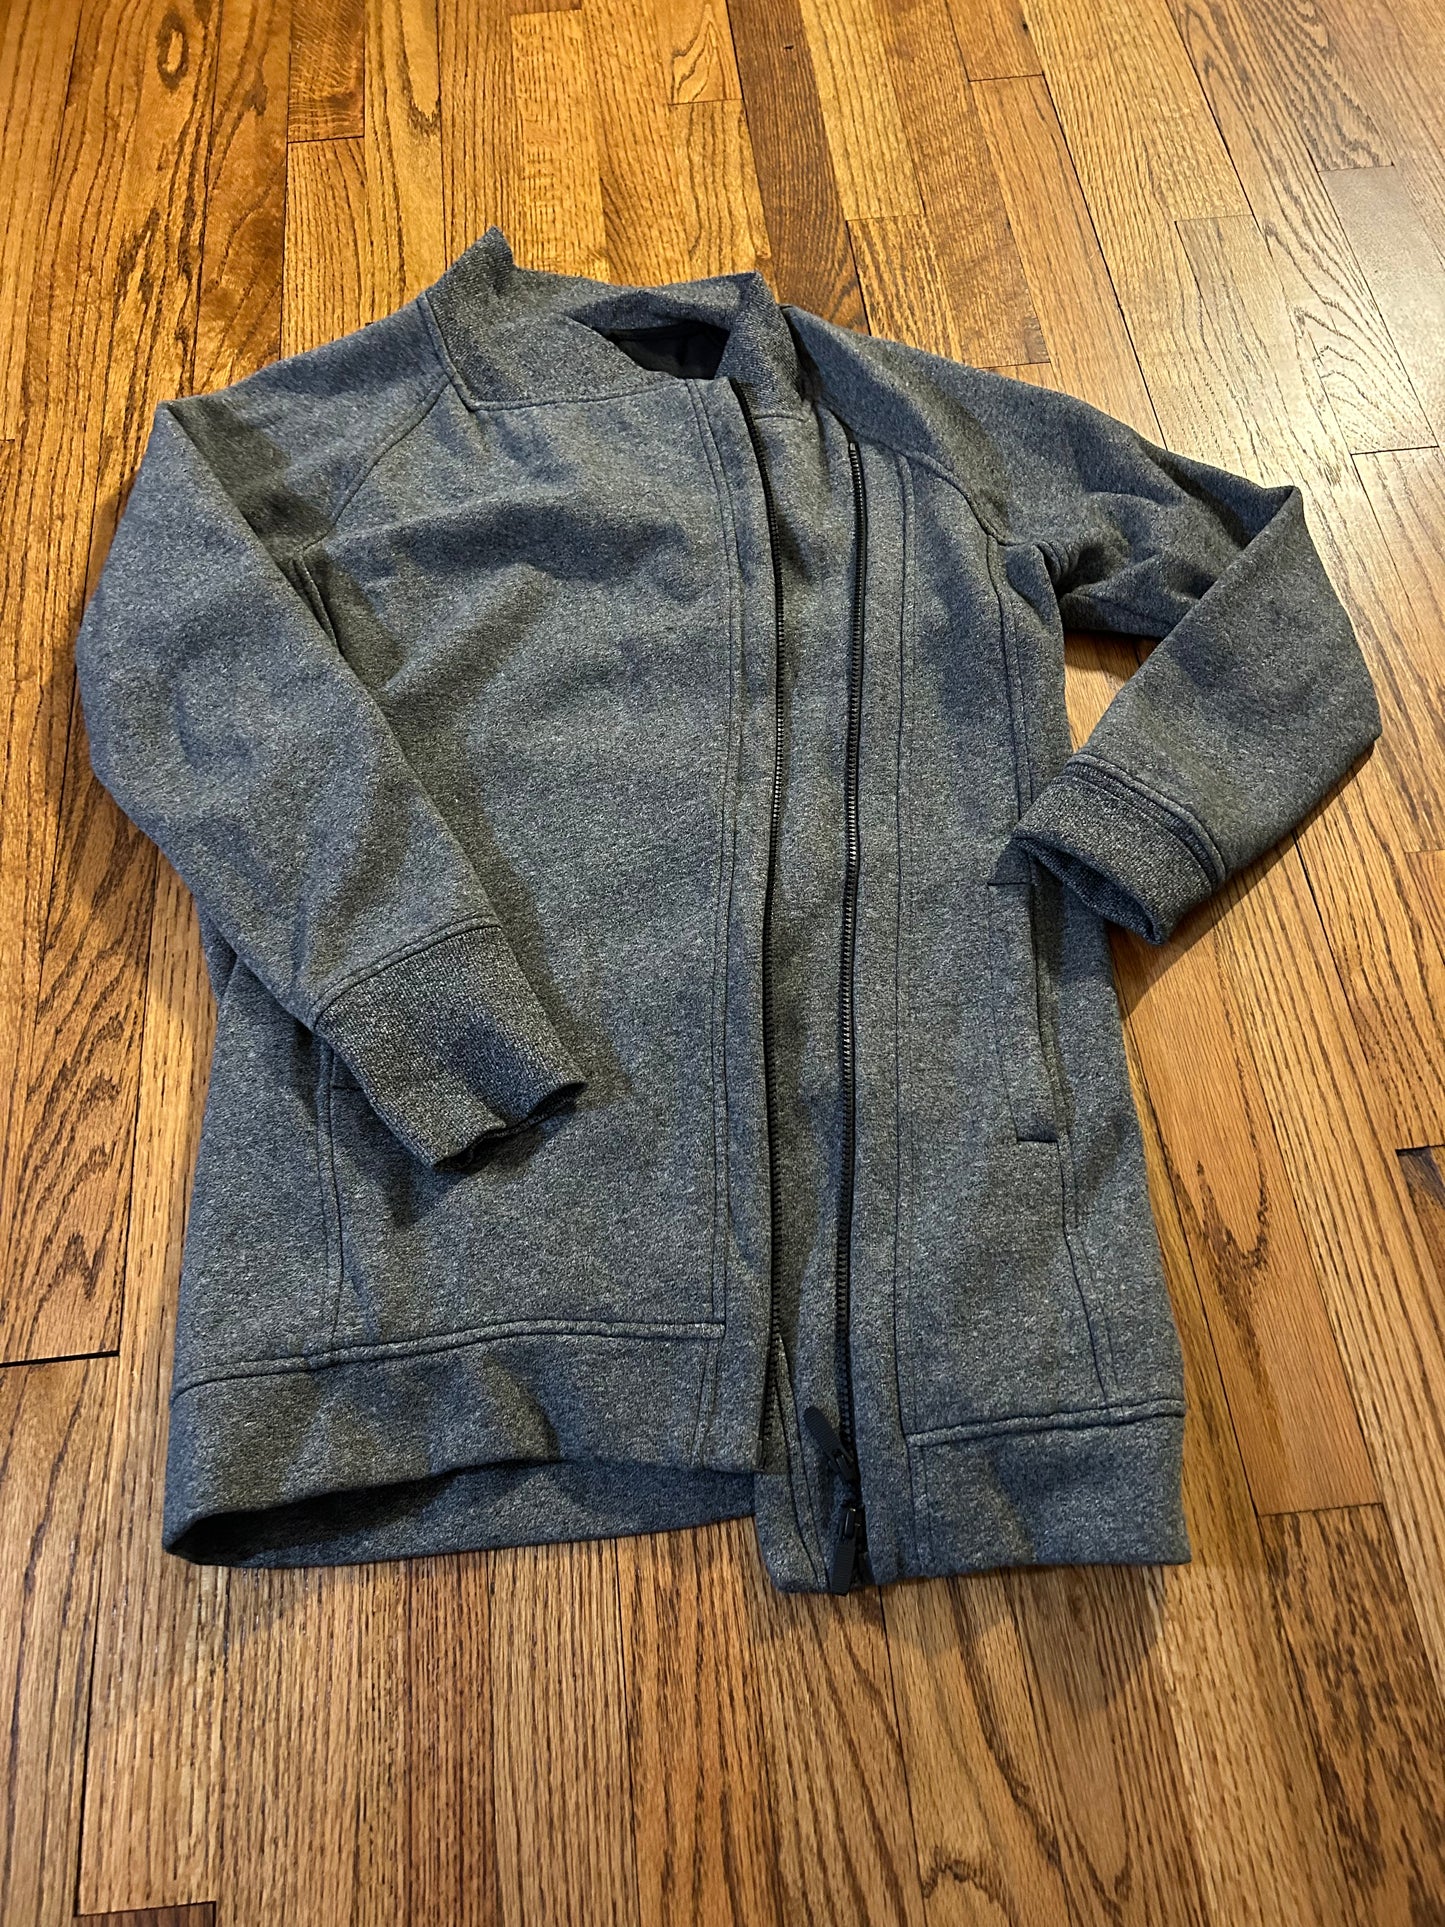 Lululemon Women's Grey Jacket with Asymmetrical Zipper - size 8